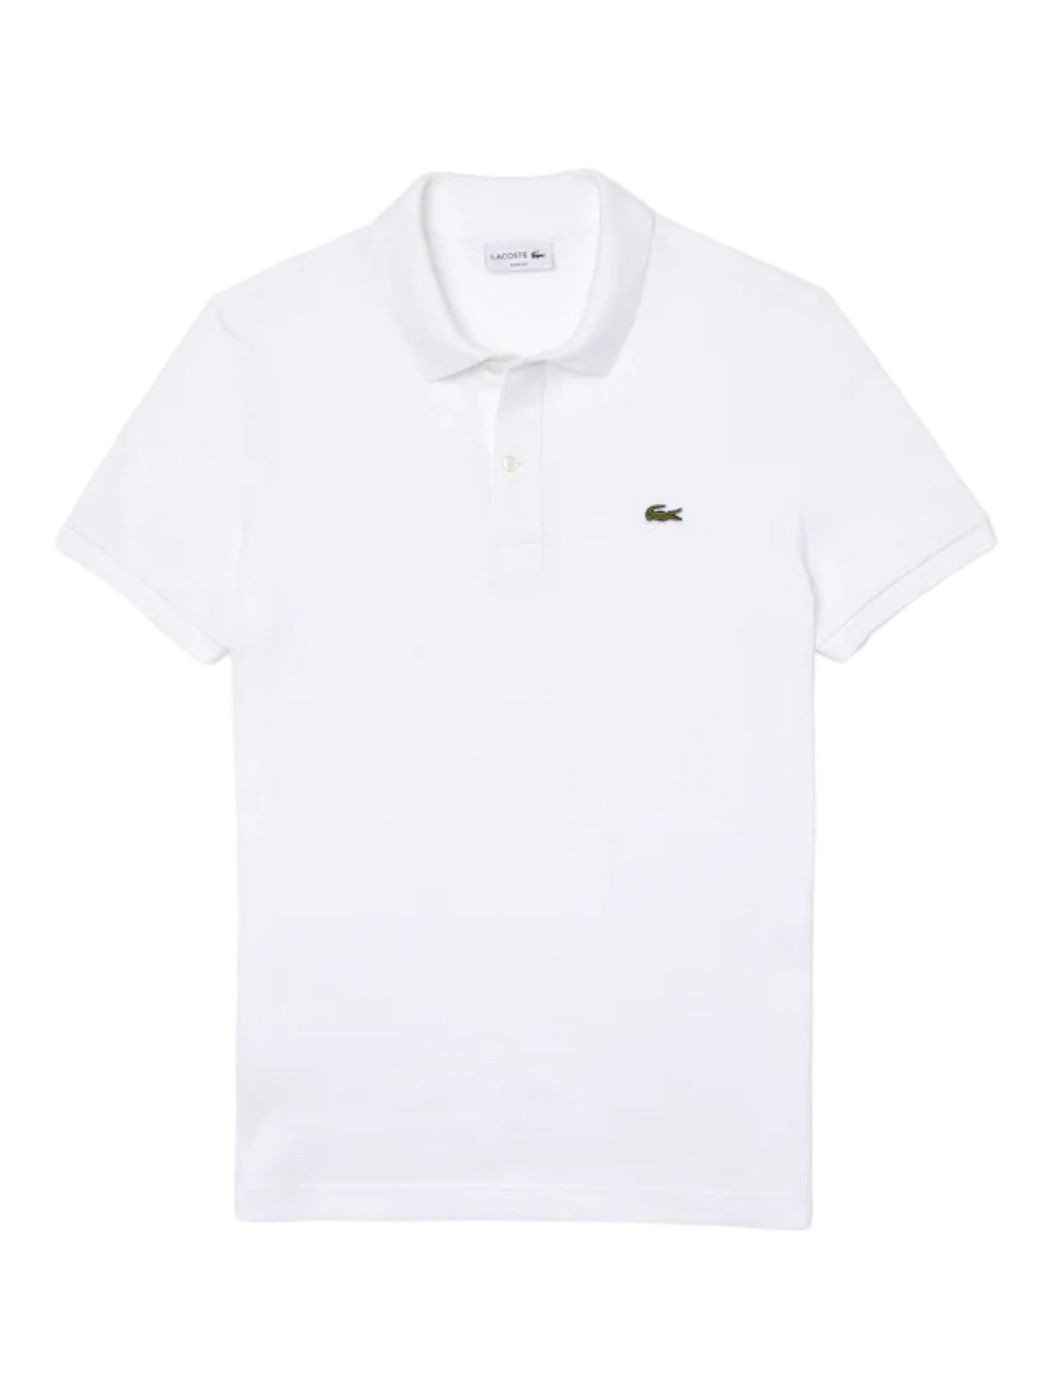 LACOSTE T-Shirt e Polo Uomo  PH4012 001 Bianco